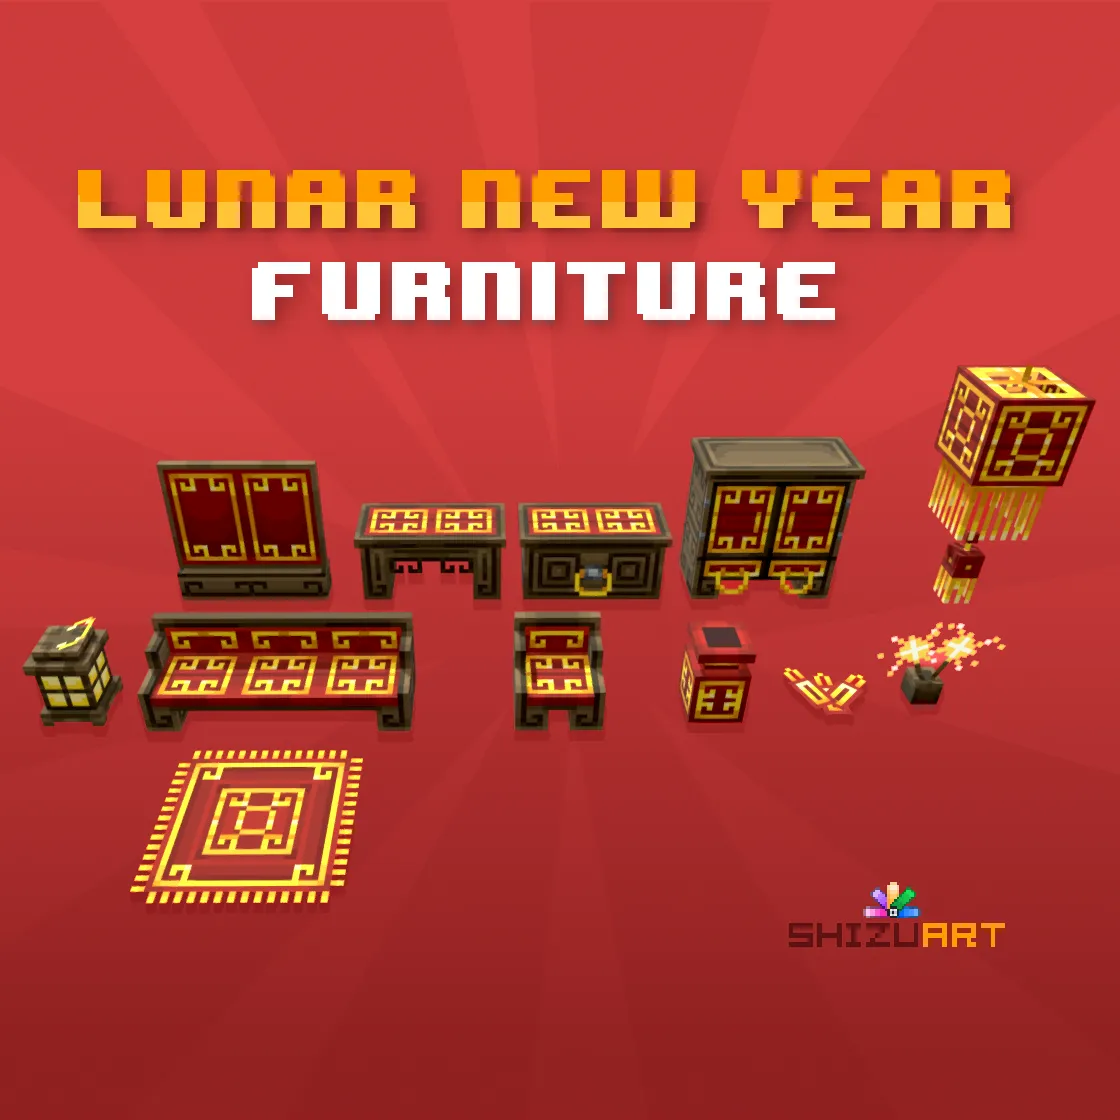 lunar new year furniture